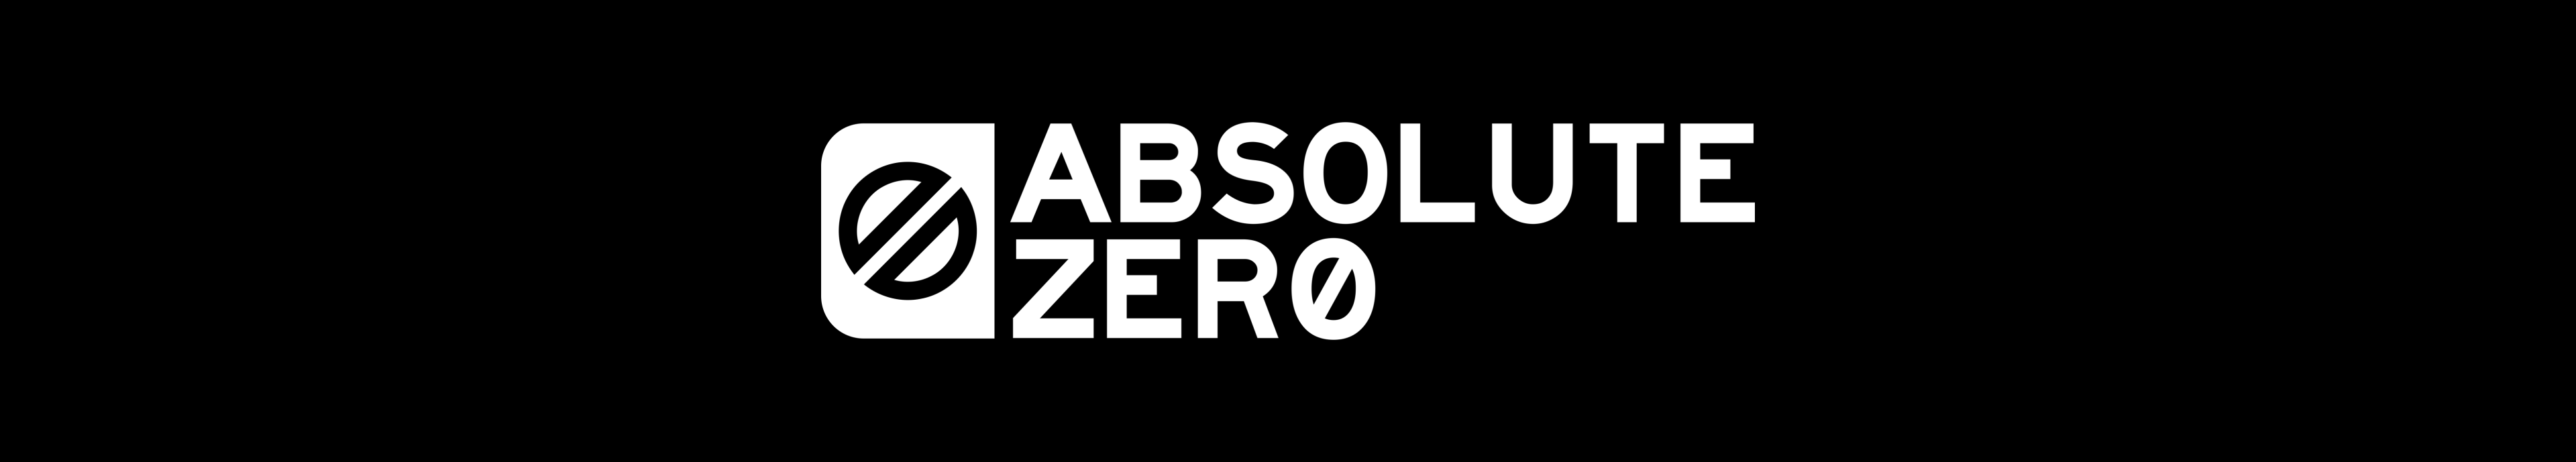 Portal: Absolute Zero